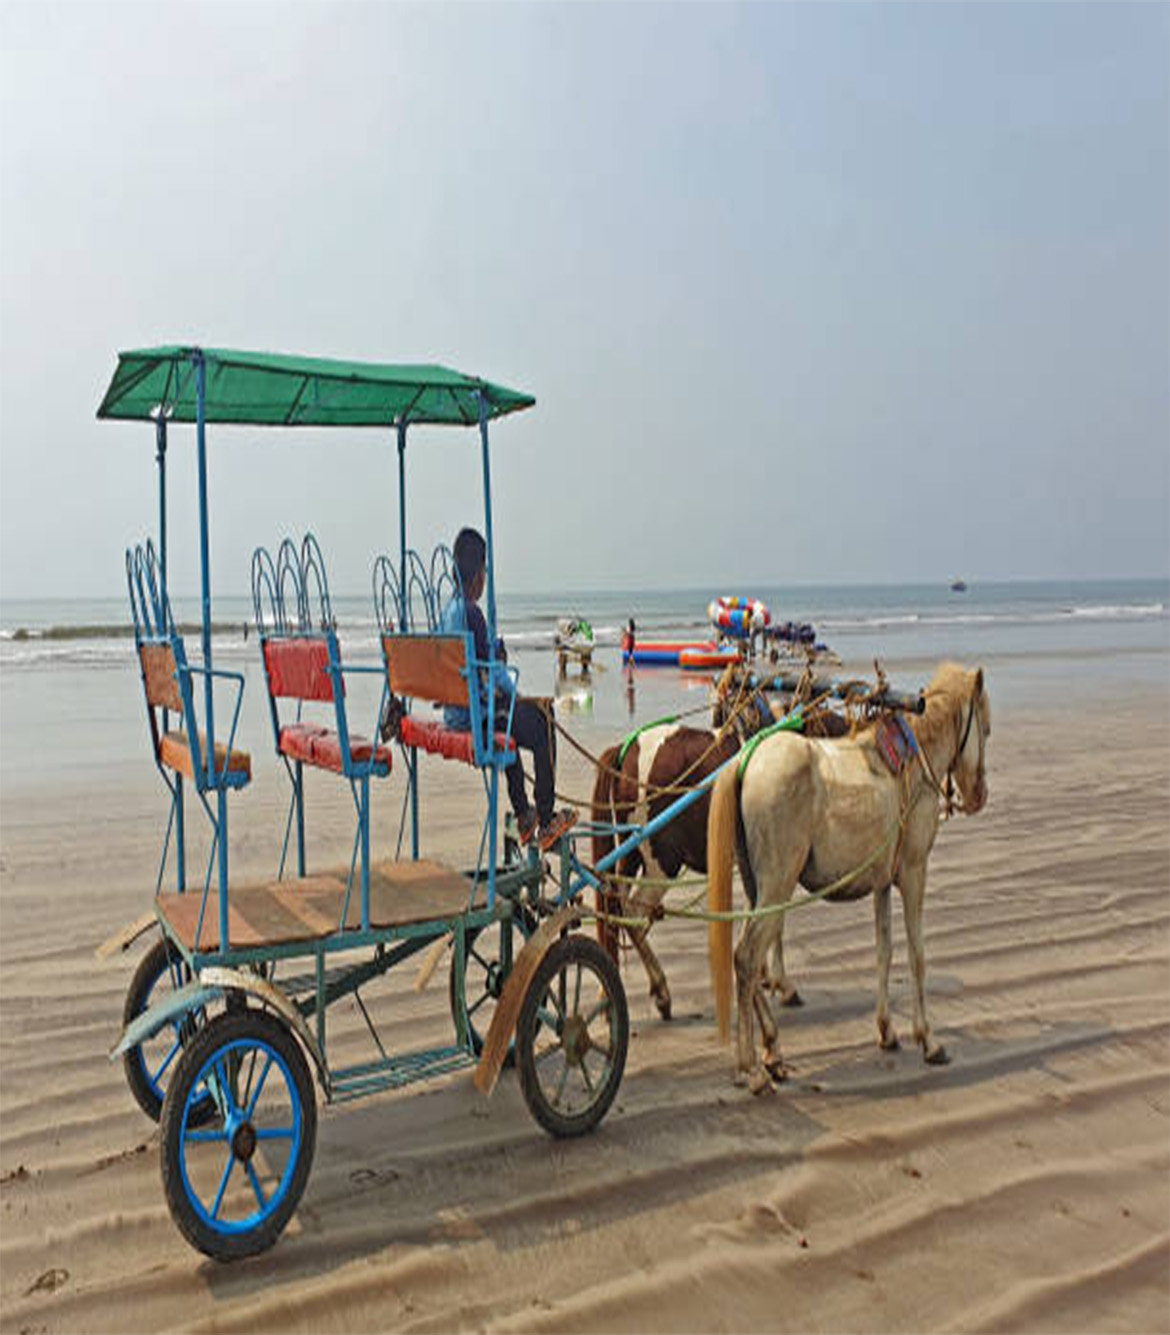 Horse Shaped Boat Ride in Diveagar Beach